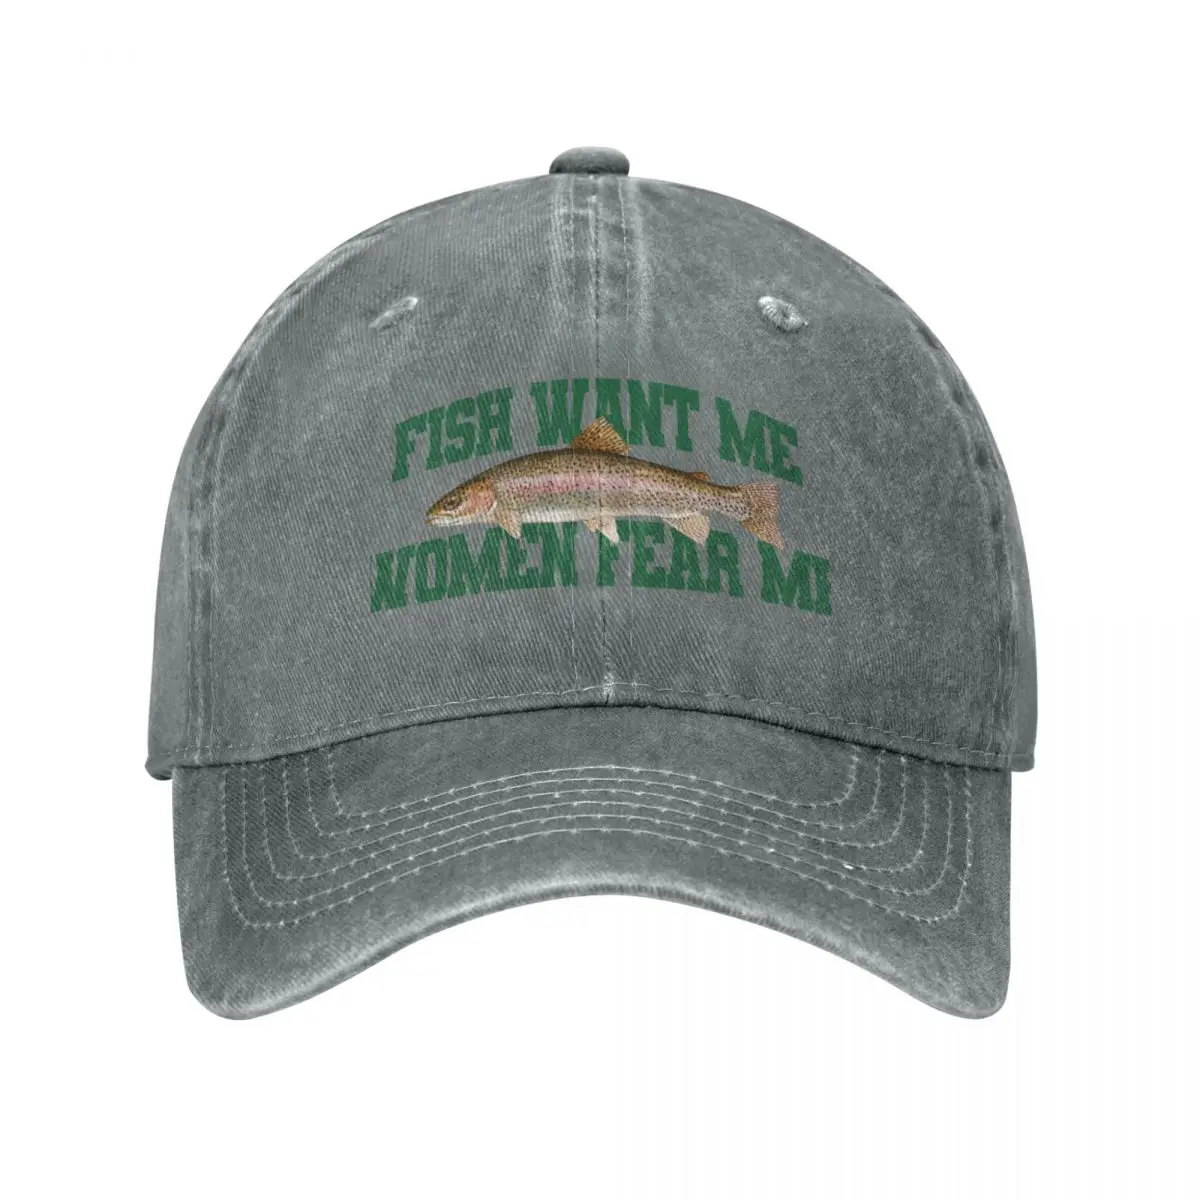 Fish Want Me Women Fear Me Meme Cap Cowboy Hat icon trucker cap gentleman  hat Cap women's Men's - AliExpress